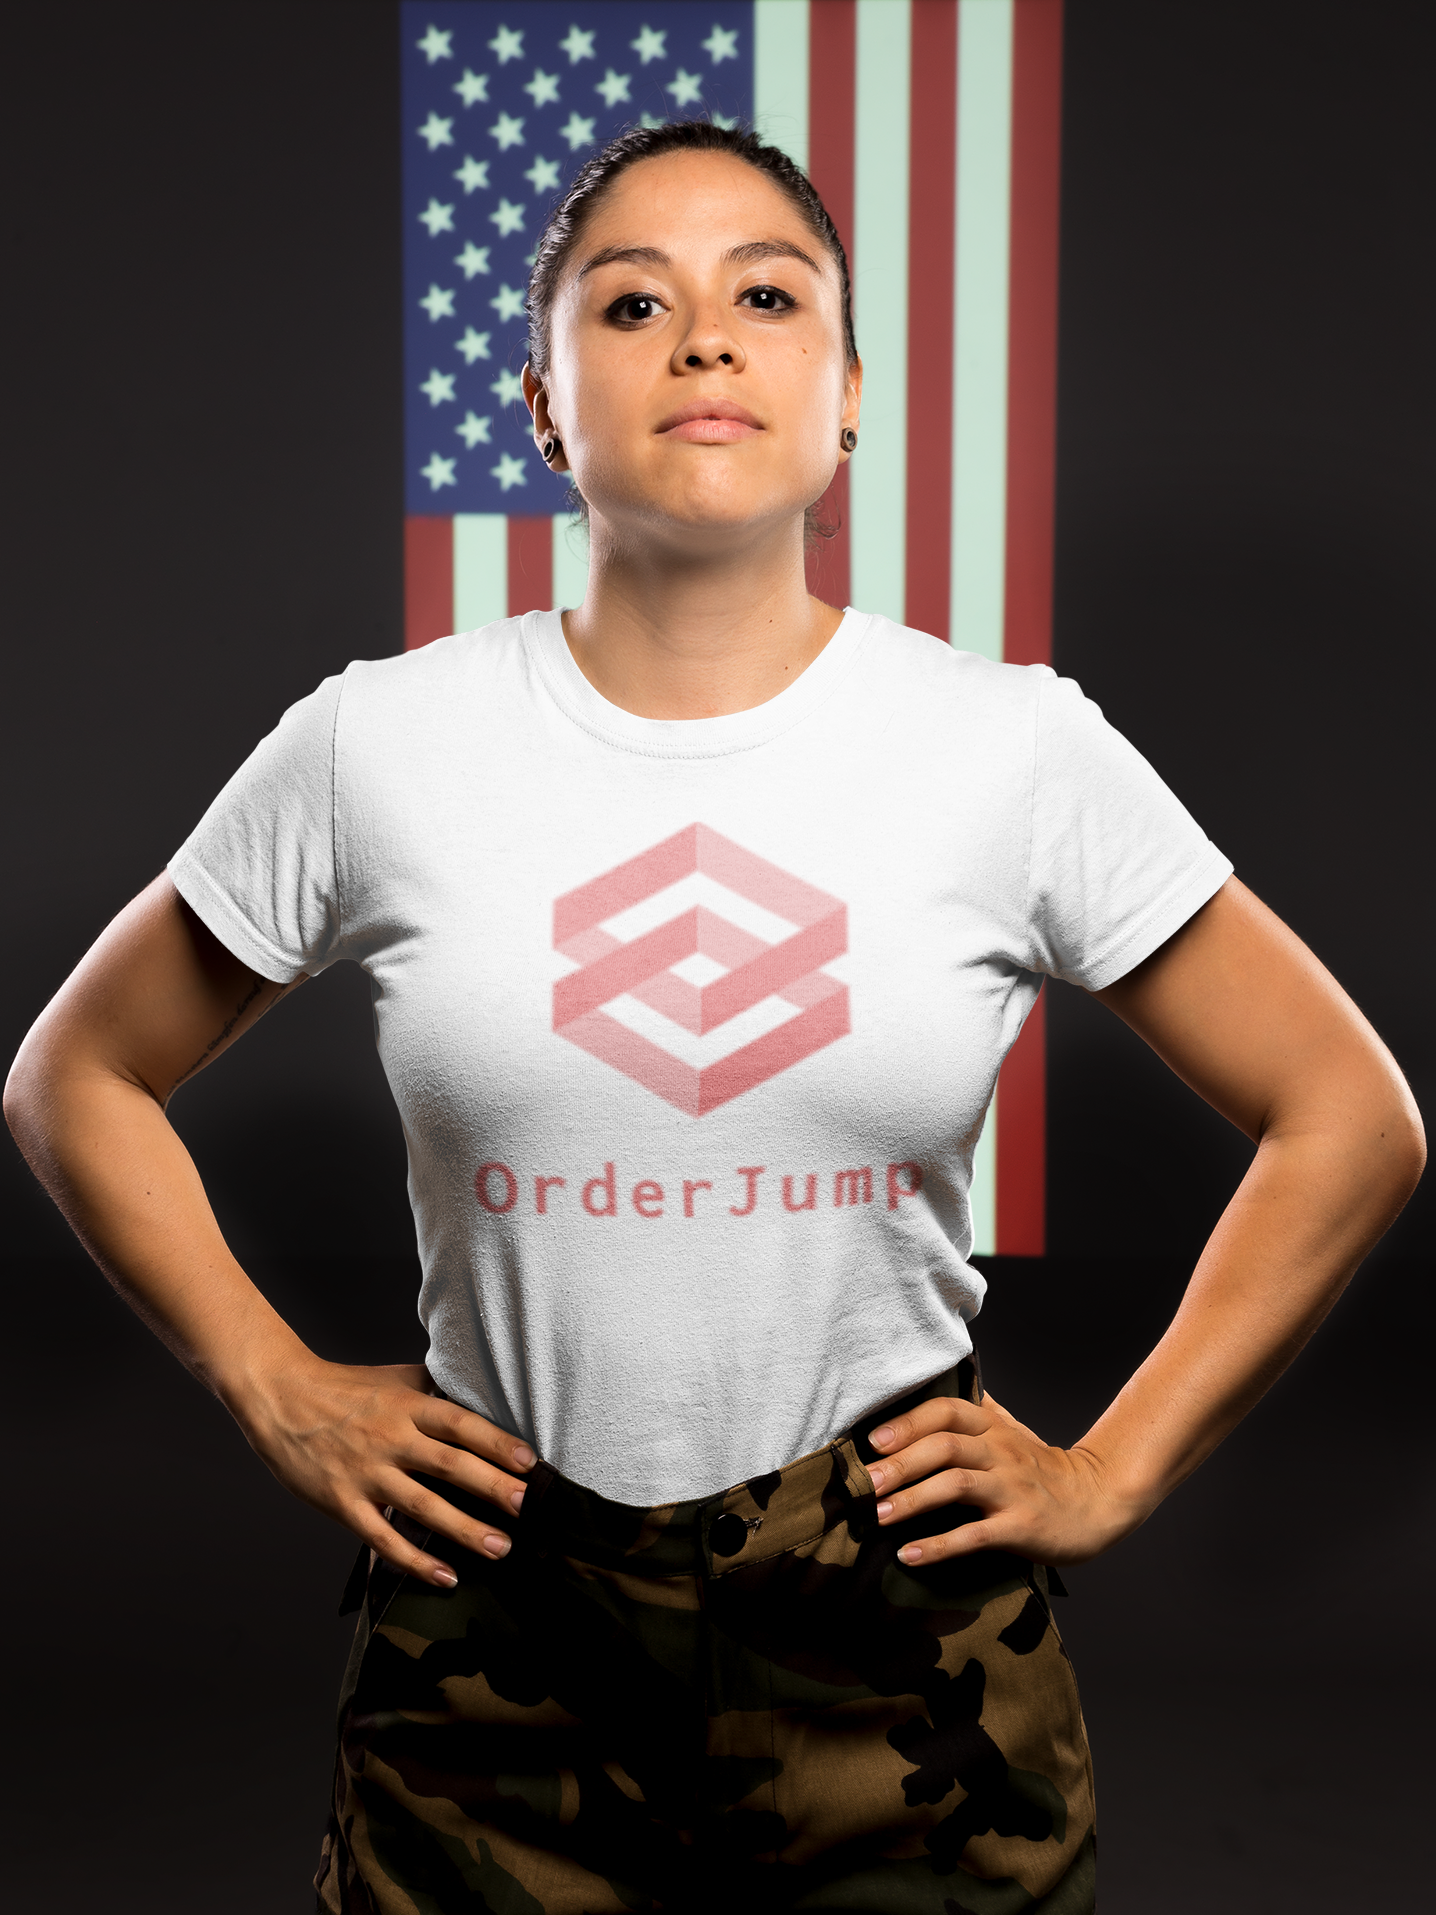 Military Supply Distributors - OrderJump